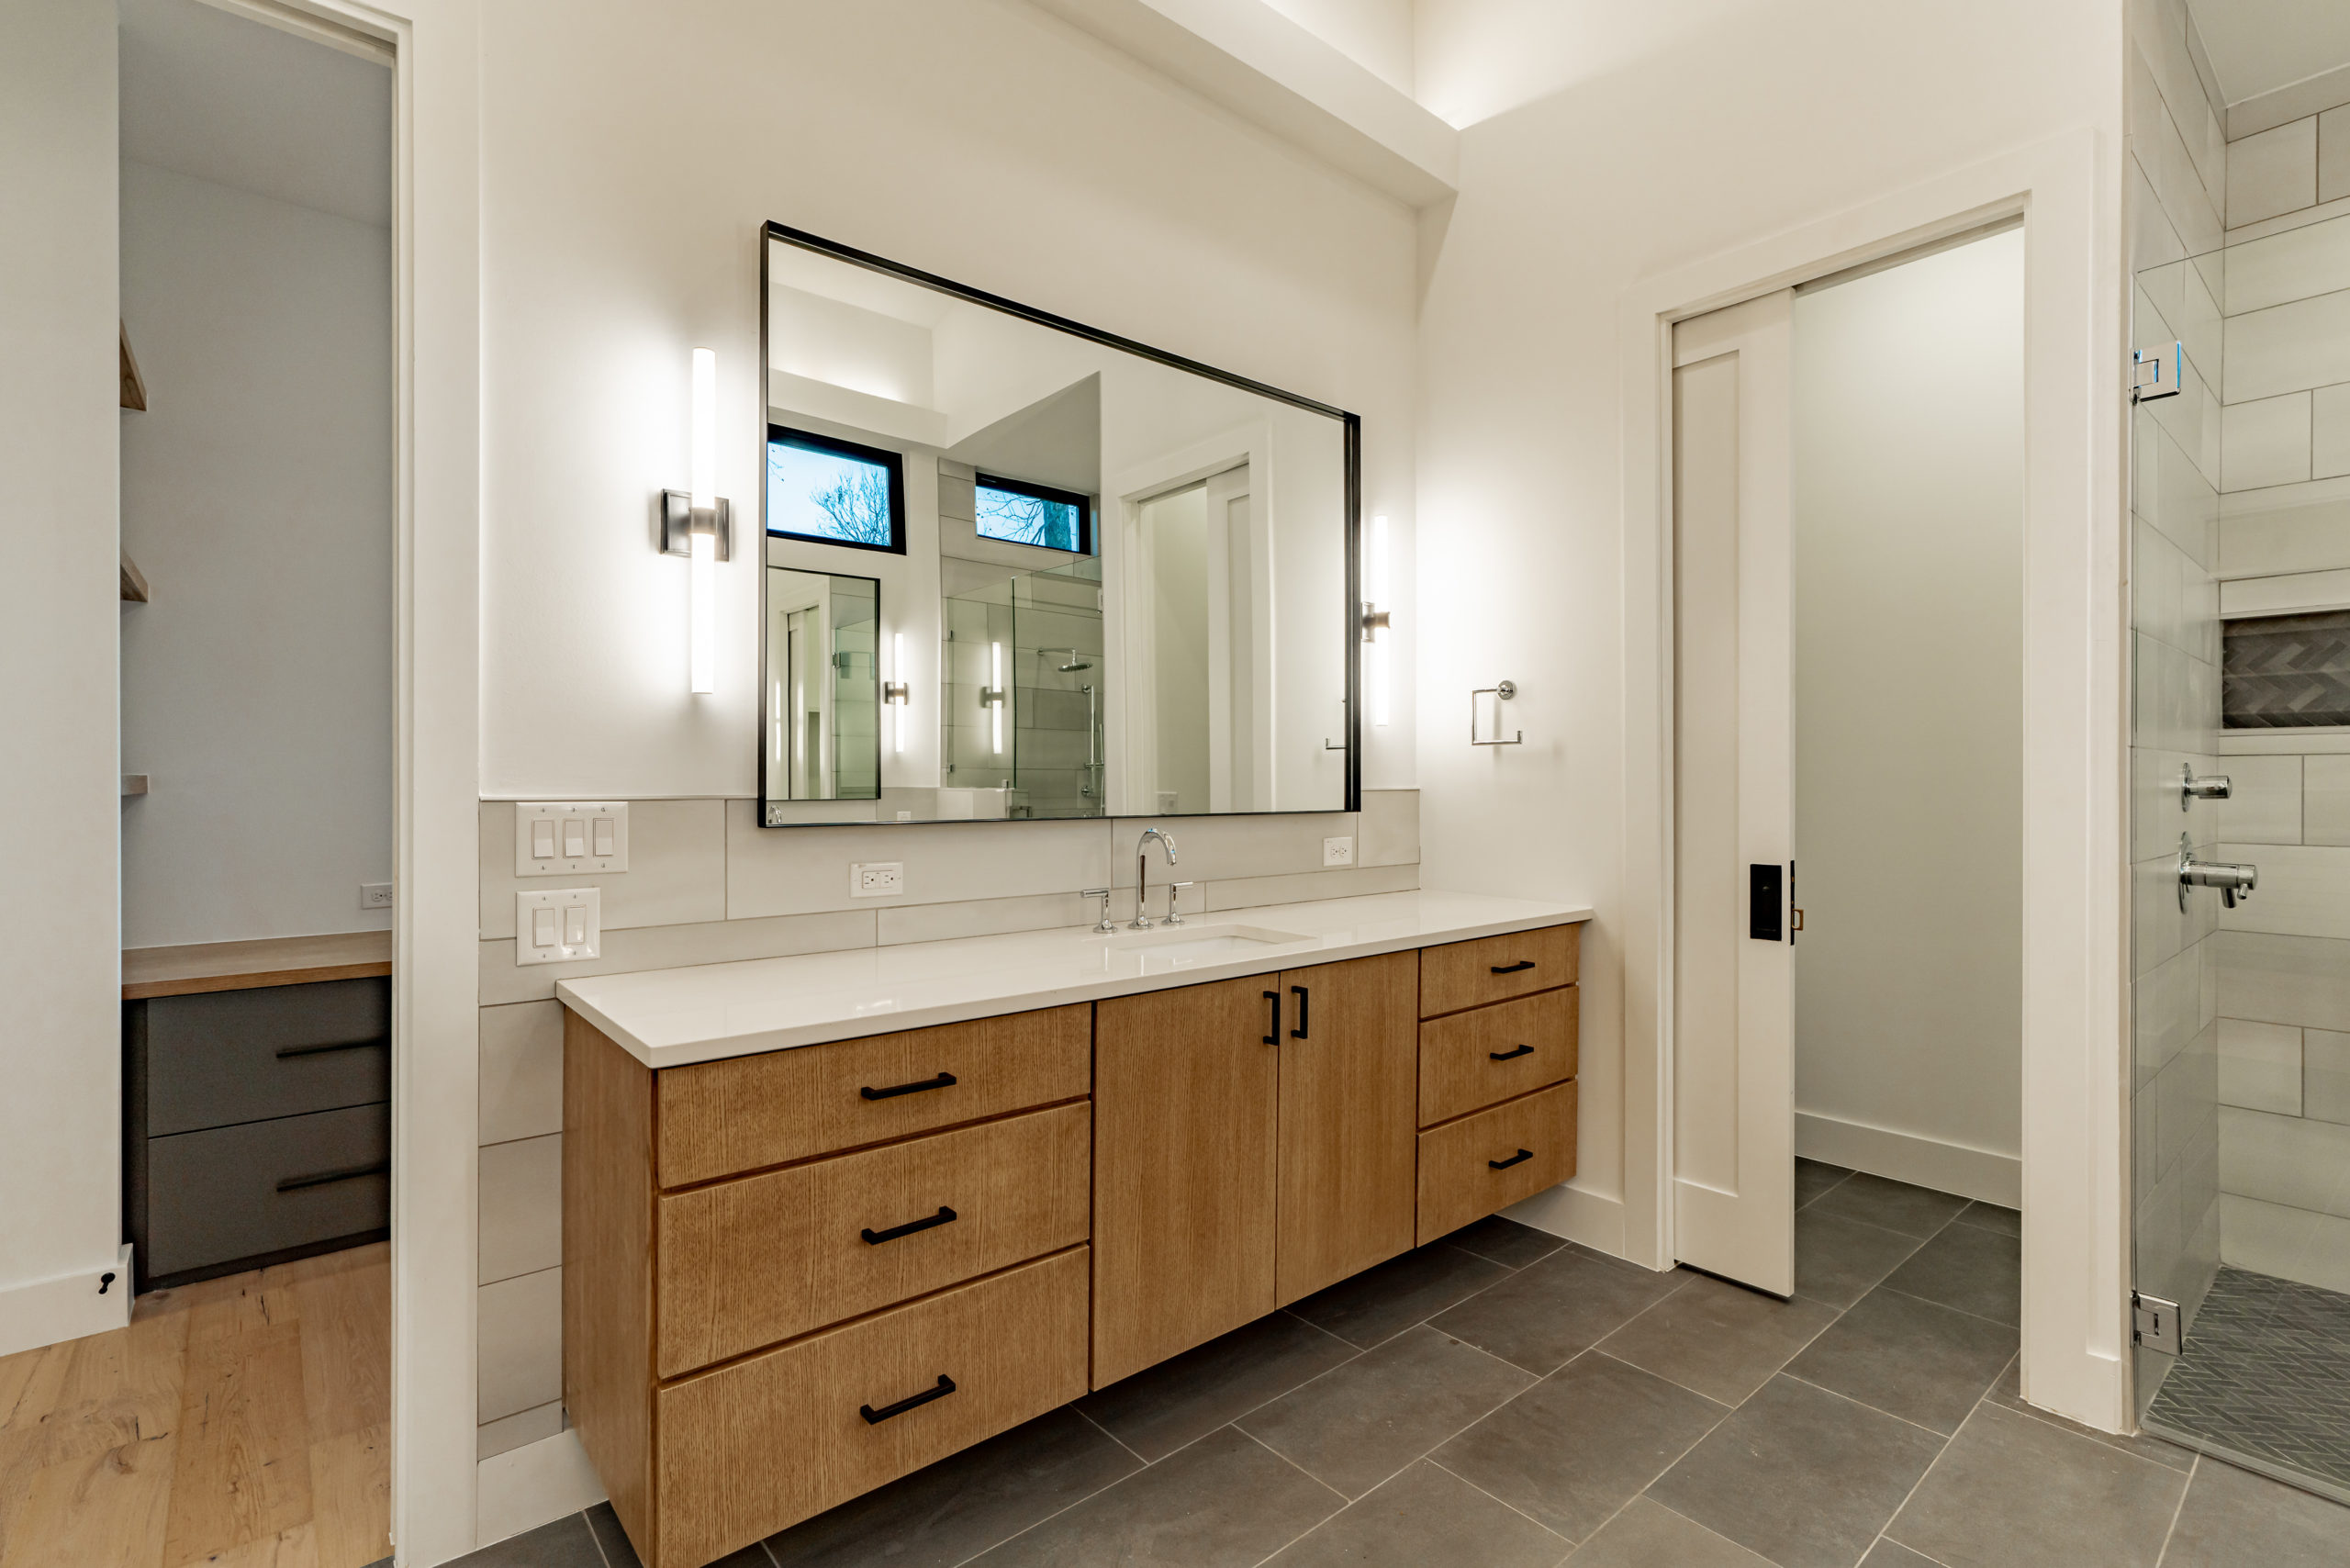 Woodview custom master suite shower dual vanities with designer lighting, plumbing and tile